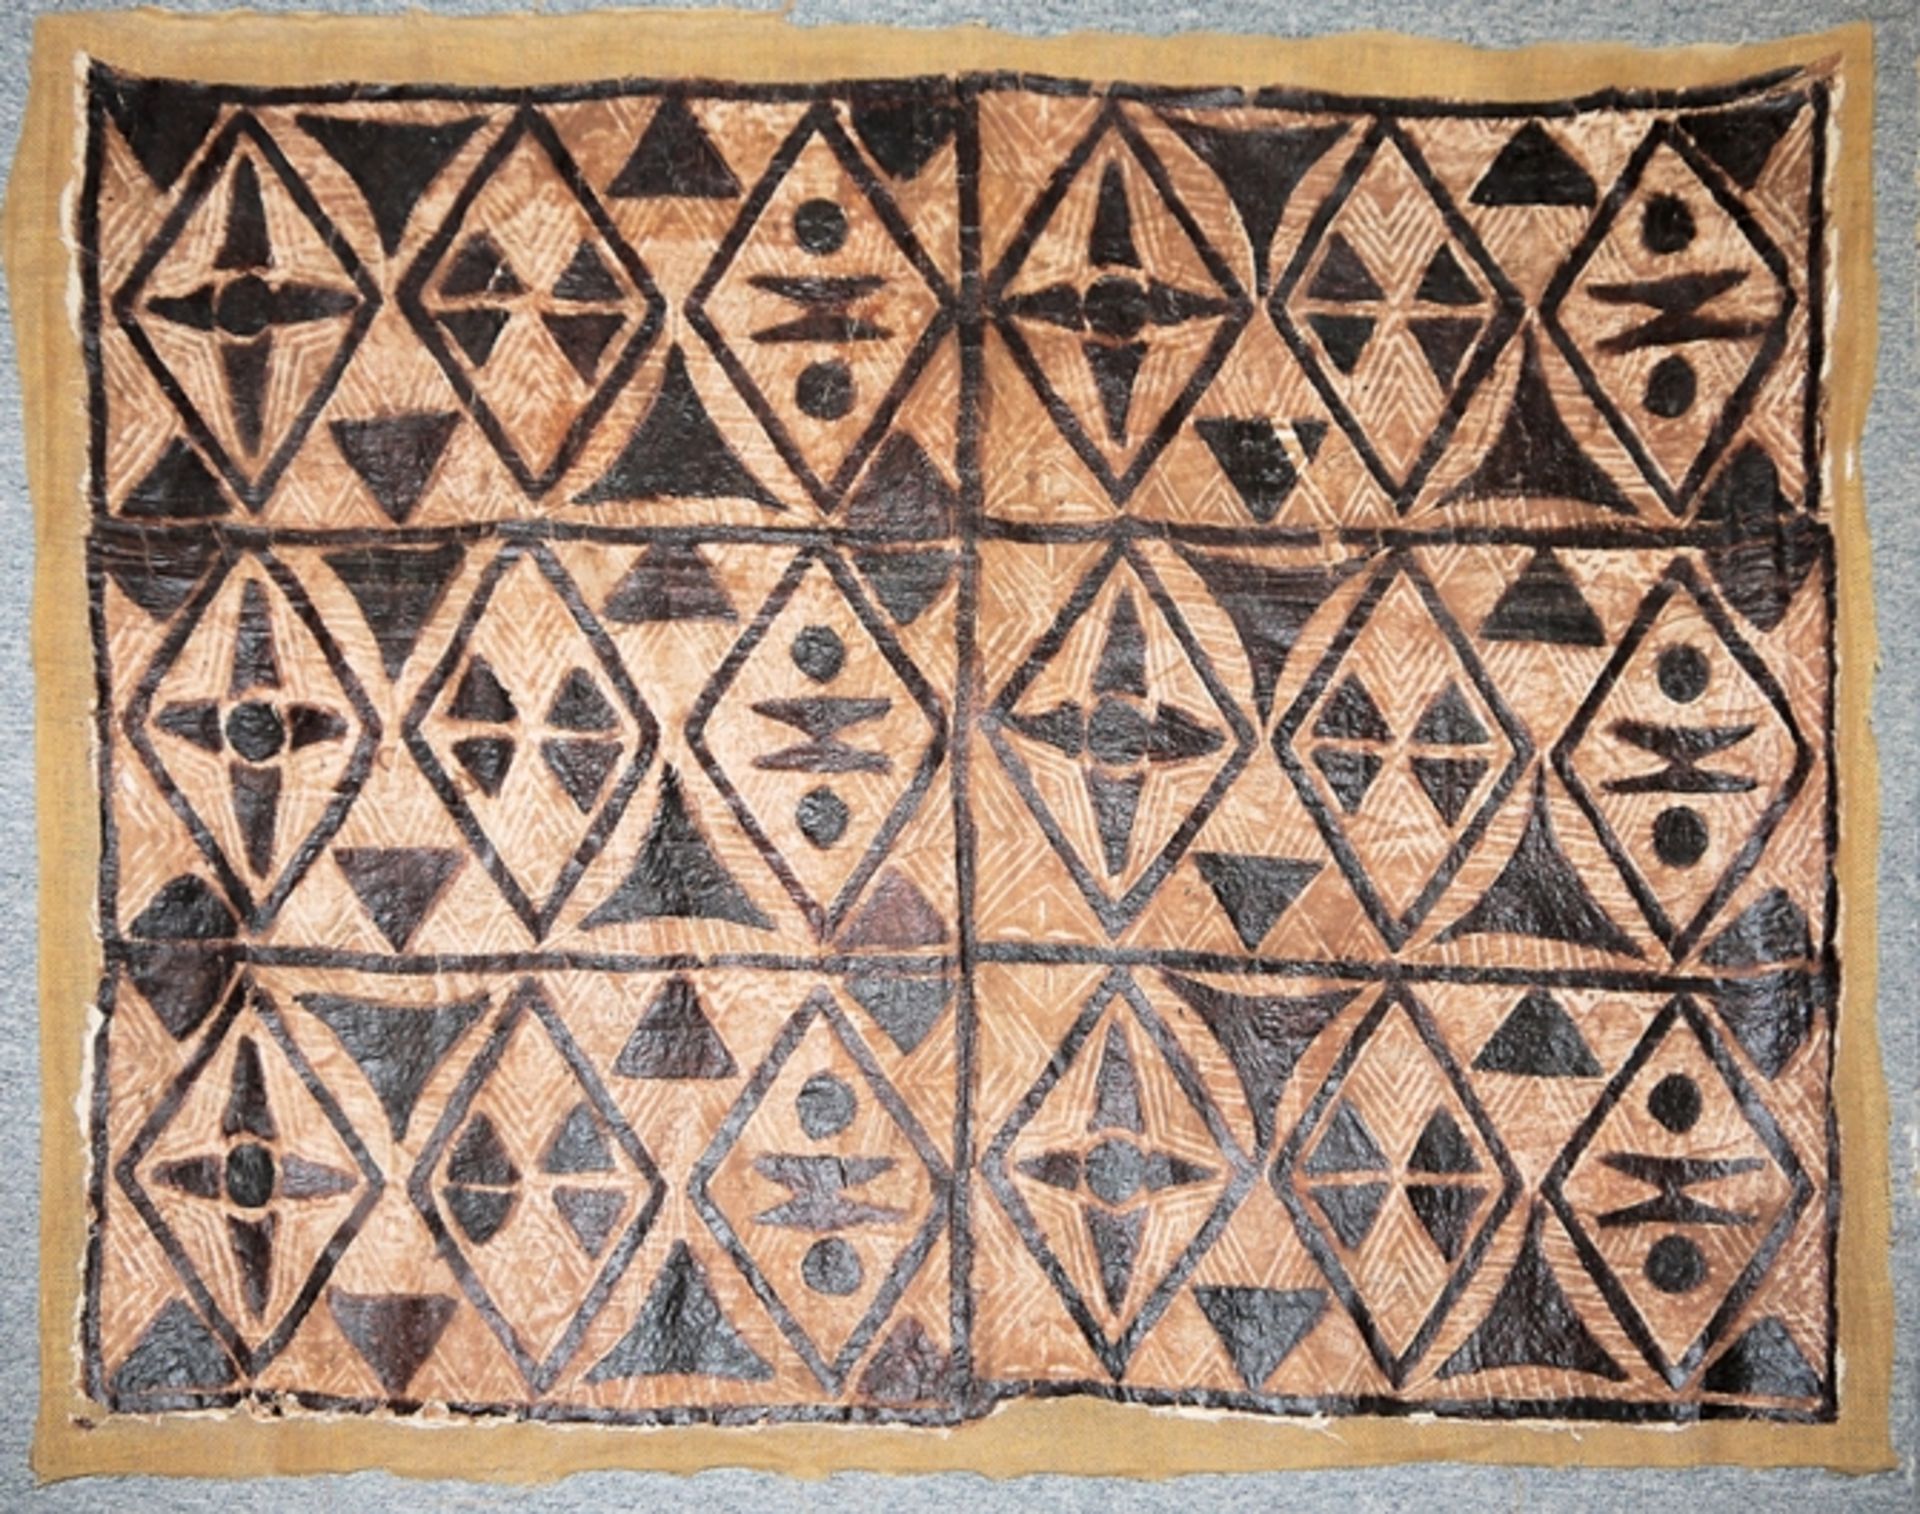 Large bark bast cloth "Tapa" from Samoa, Polynesia